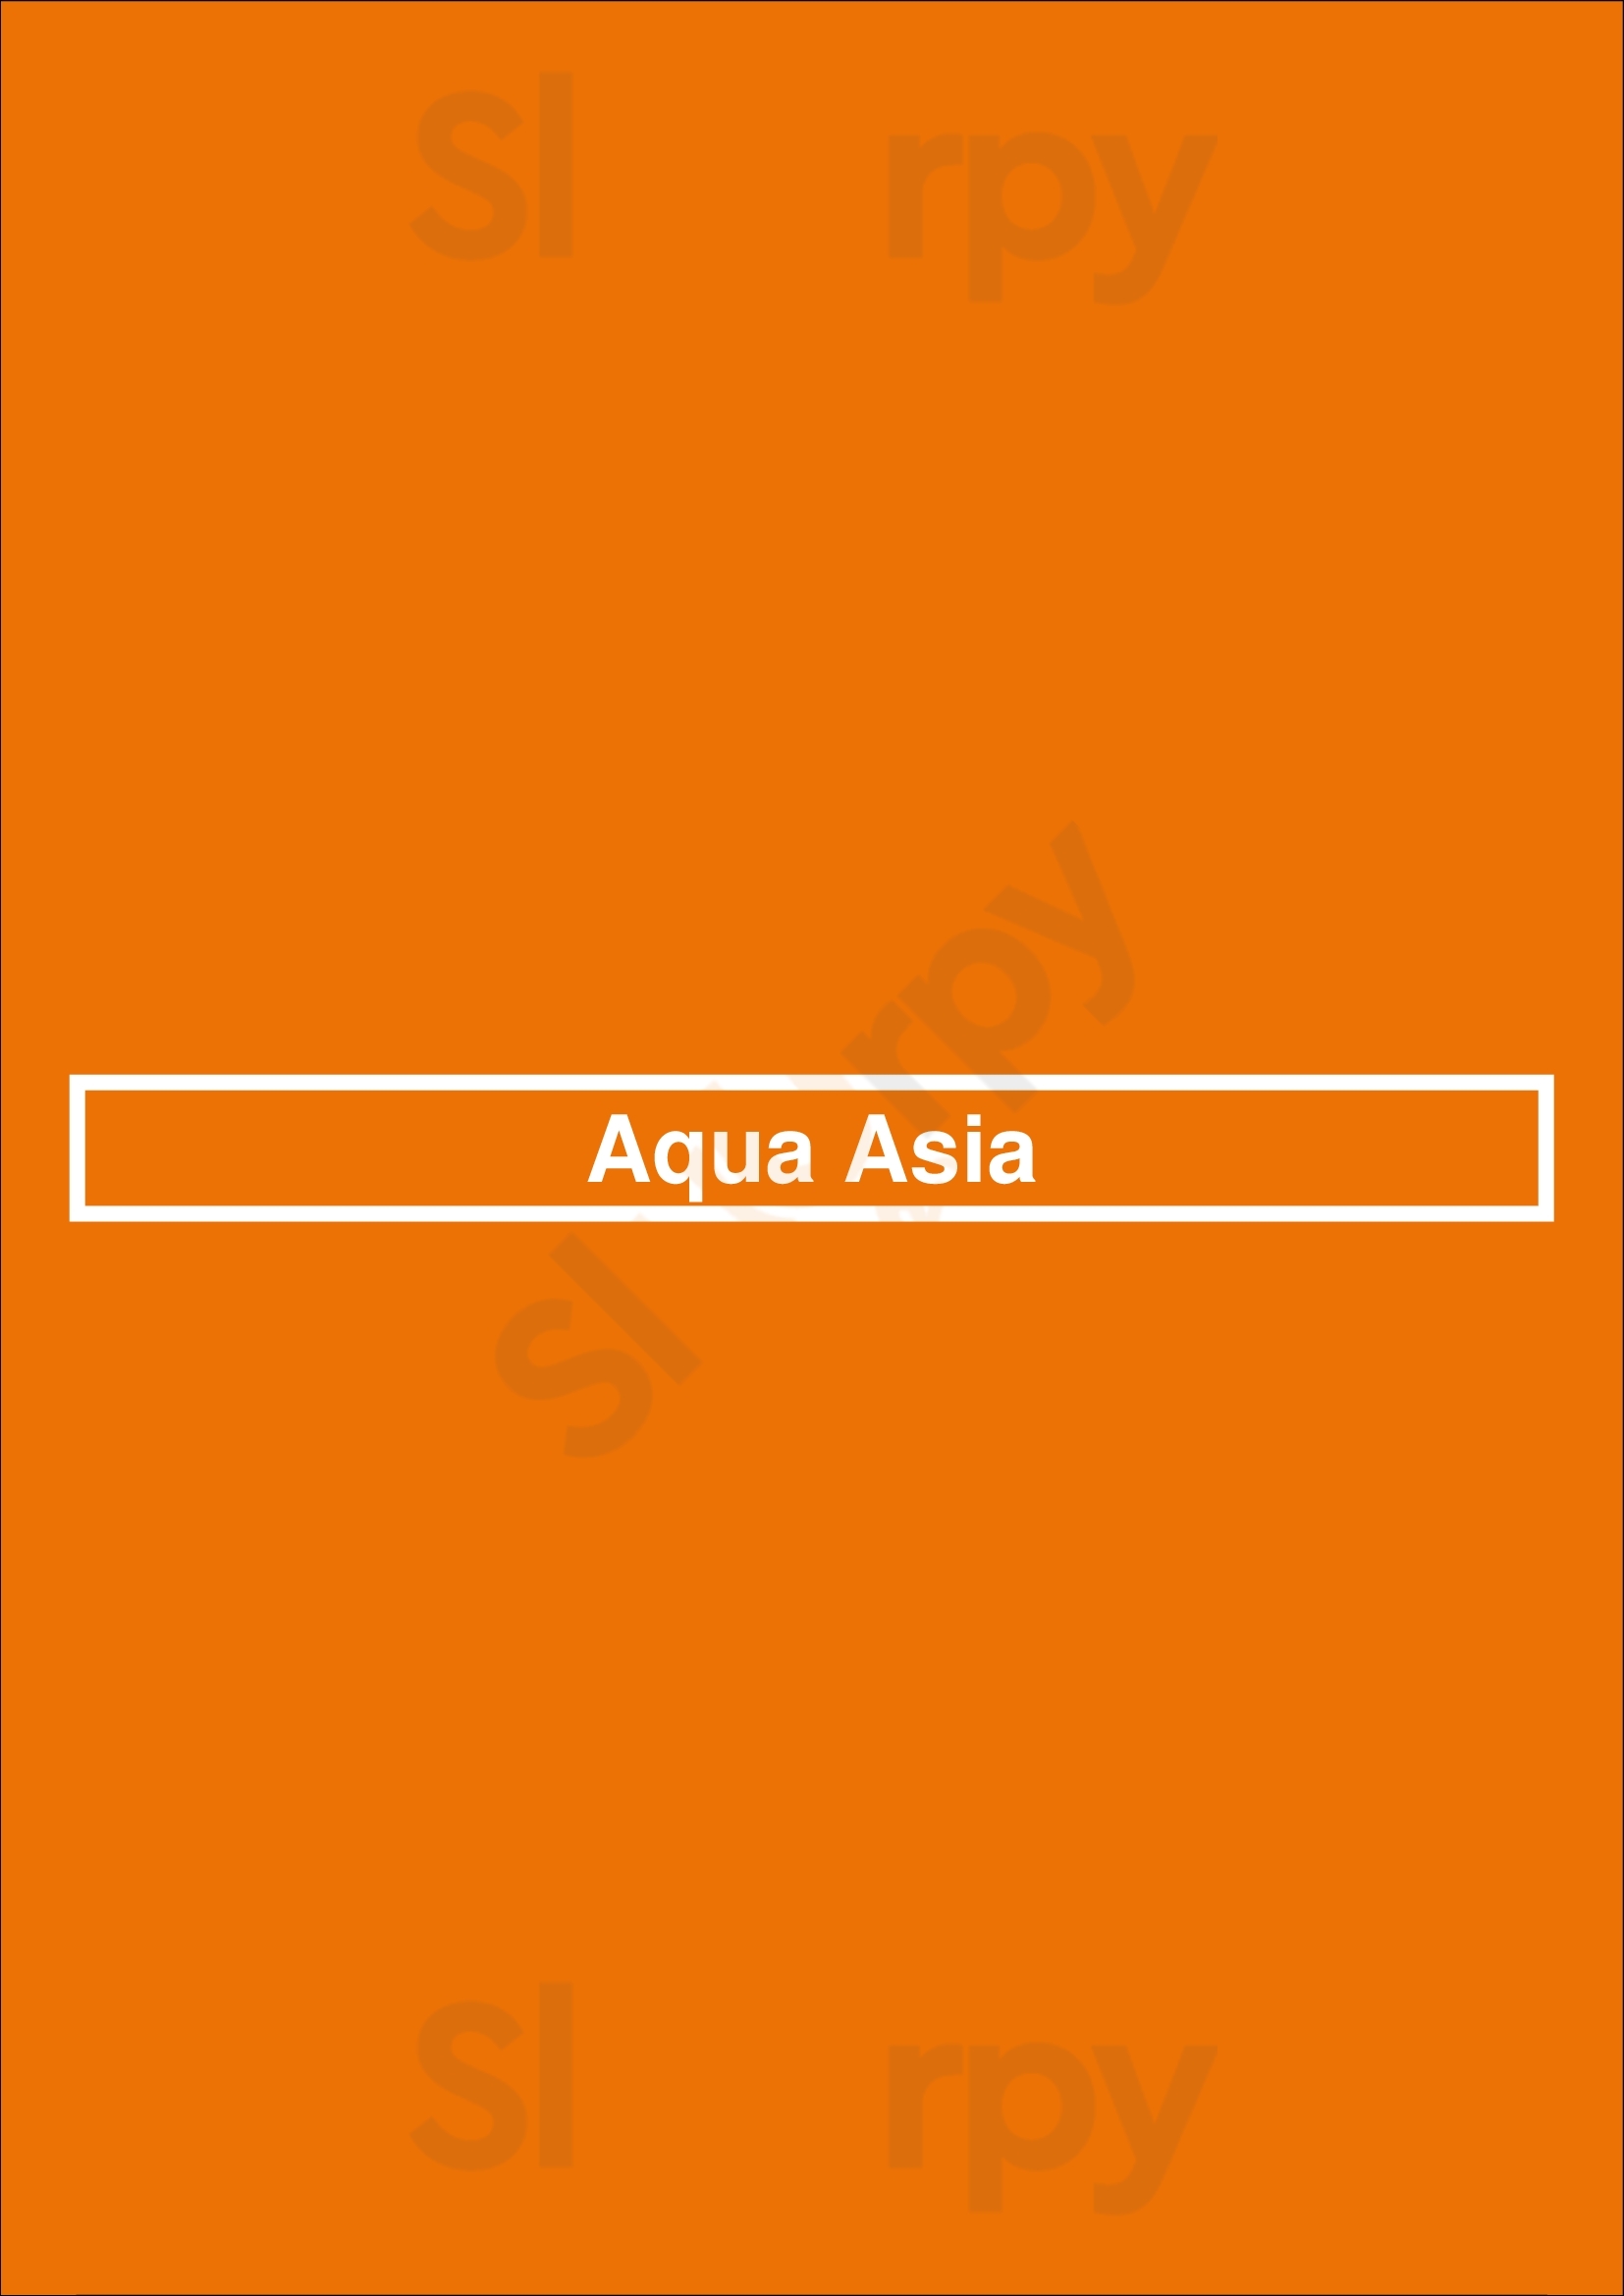 Aqua Asia Rotterdam Menu - 1